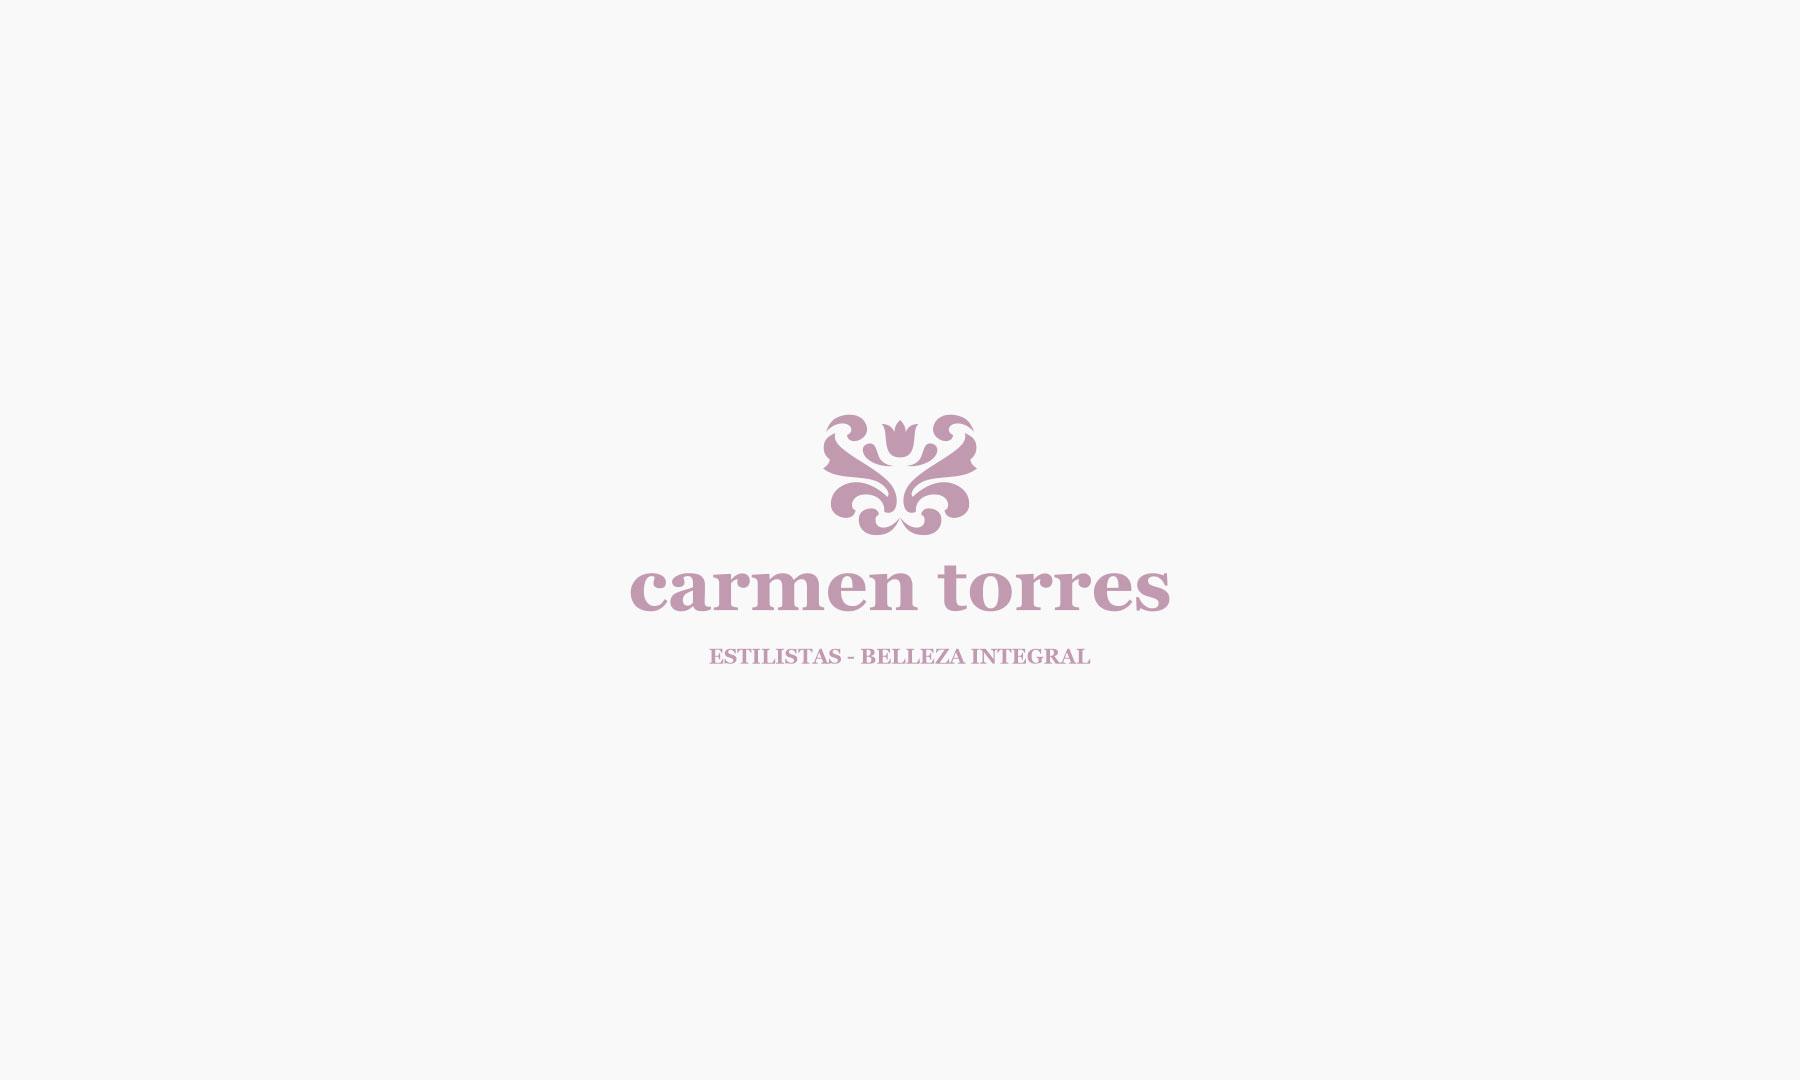 carmen torres logo estilistas - javier real